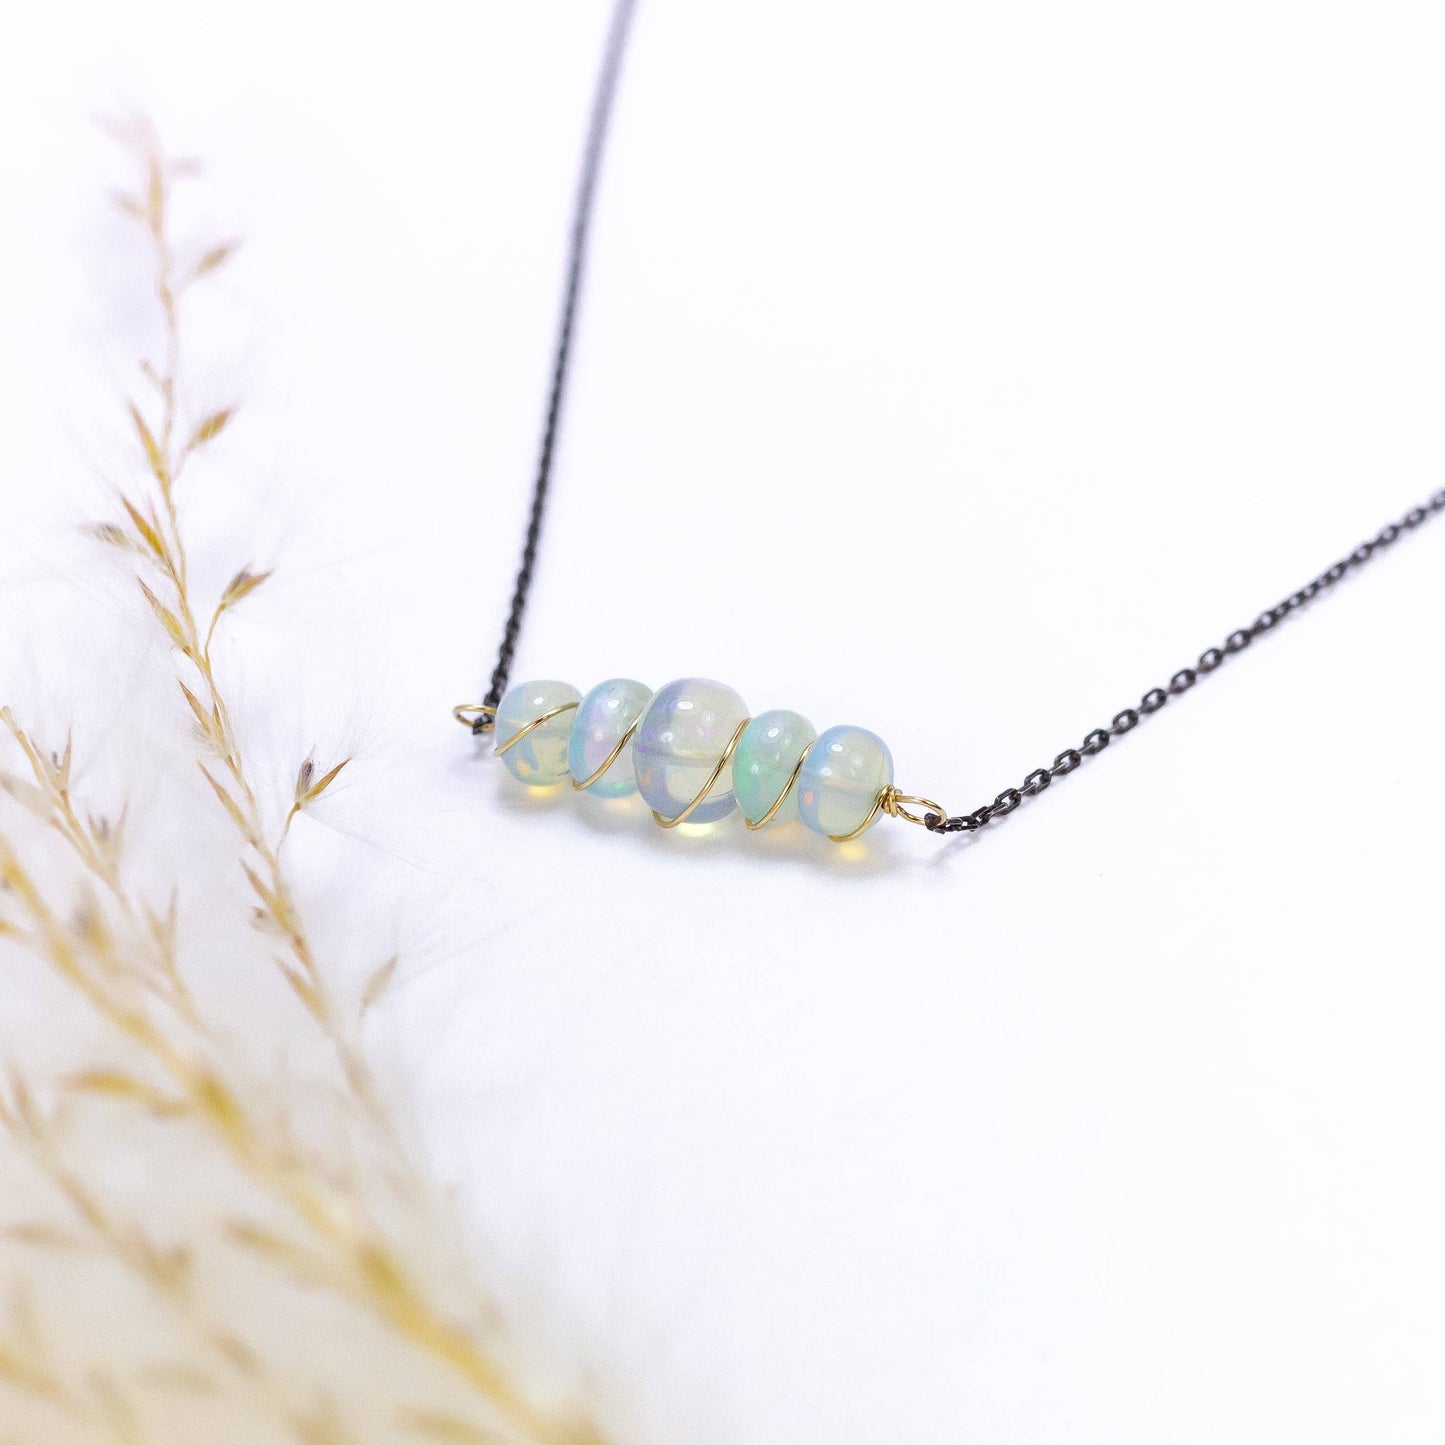 Laura J Designs - Opal Twist Necklace